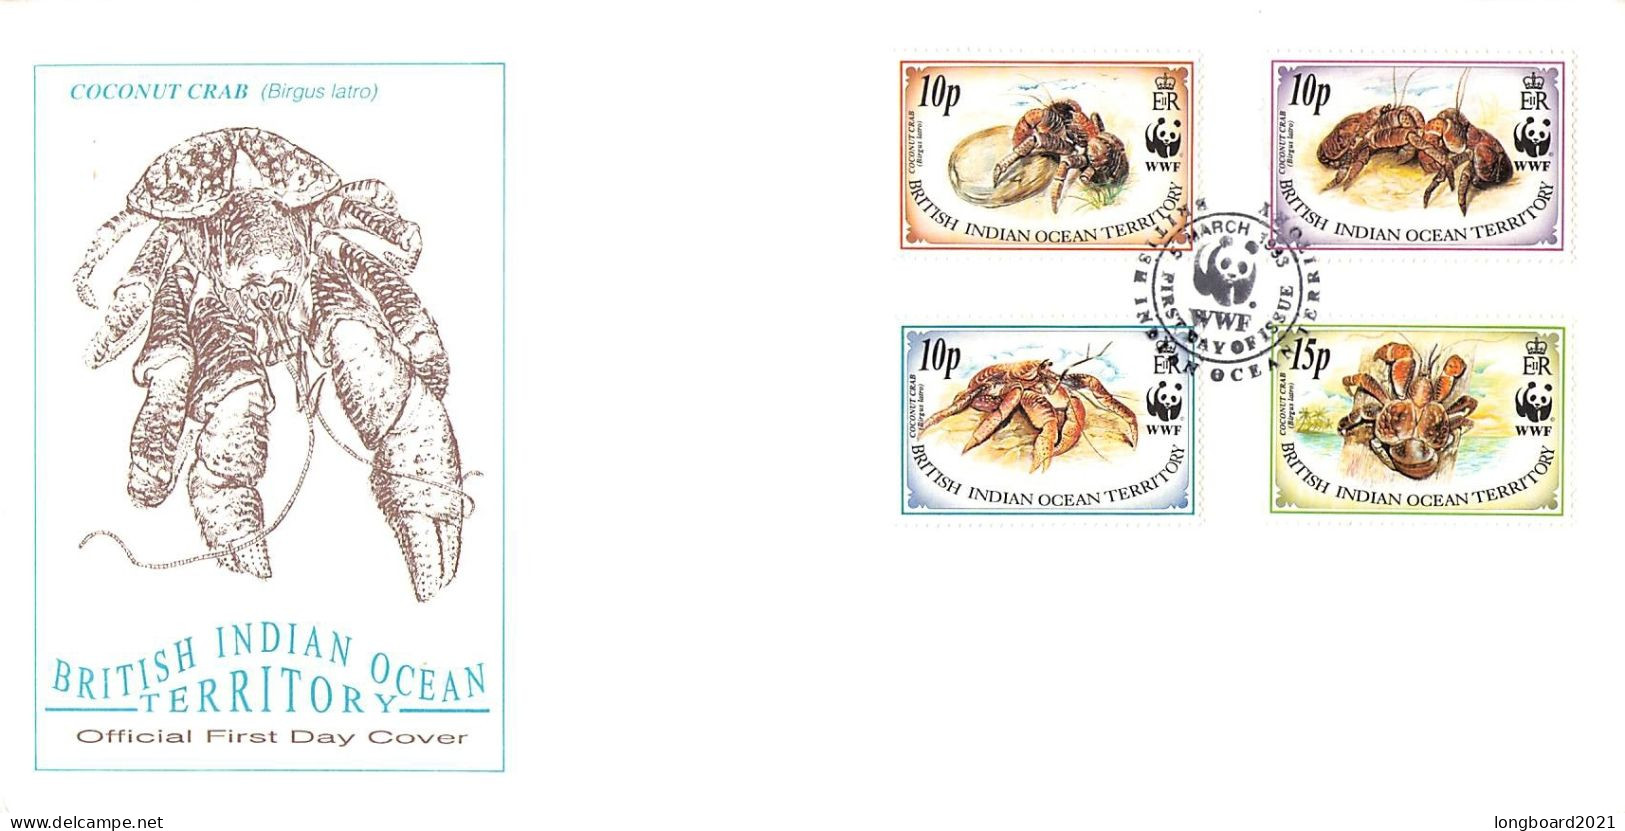 BRIT. INDIAN OCEAN TERR. - FDC WWF 1993 - CRAB / 4248 - Territorio Britannico Dell'Oceano Indiano